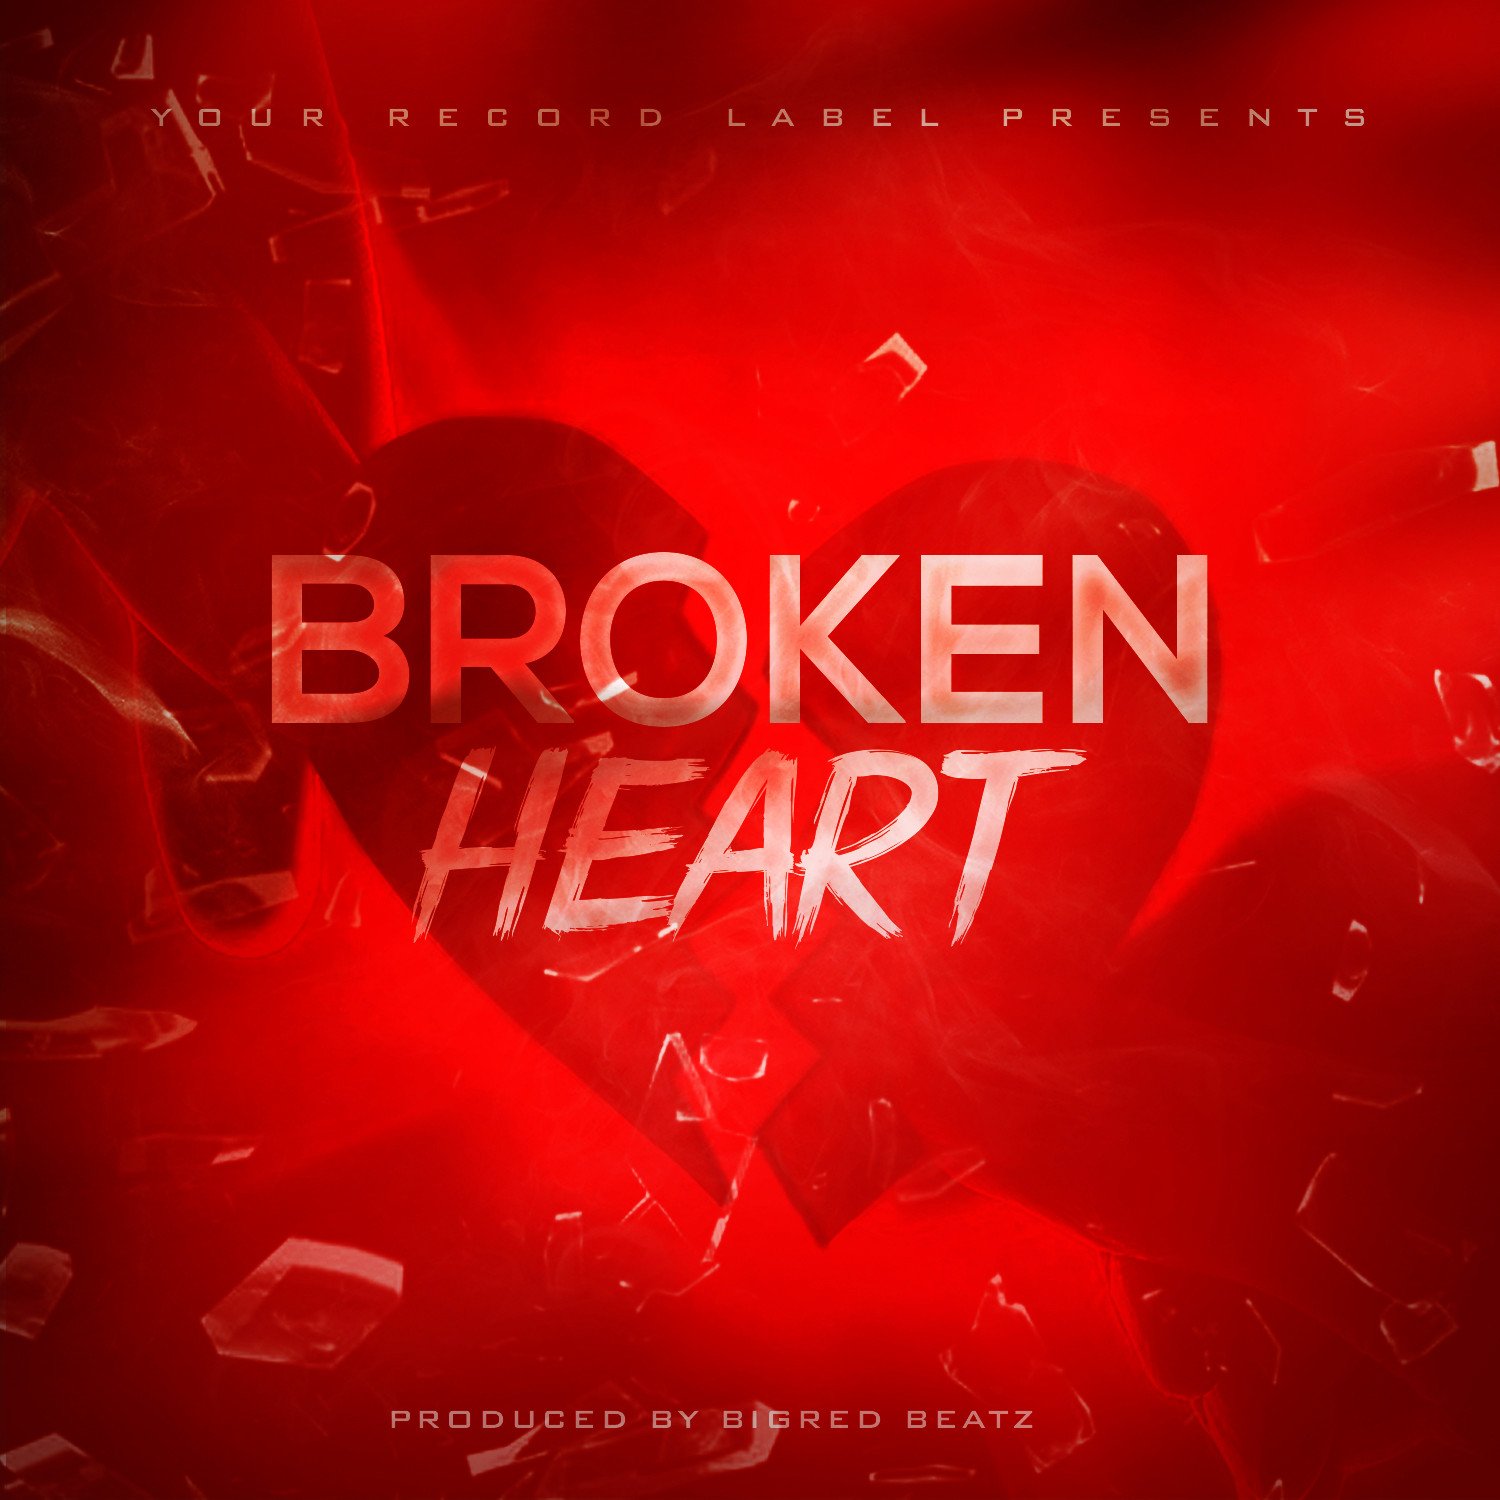 Broken Hearts Free Album Cover Template